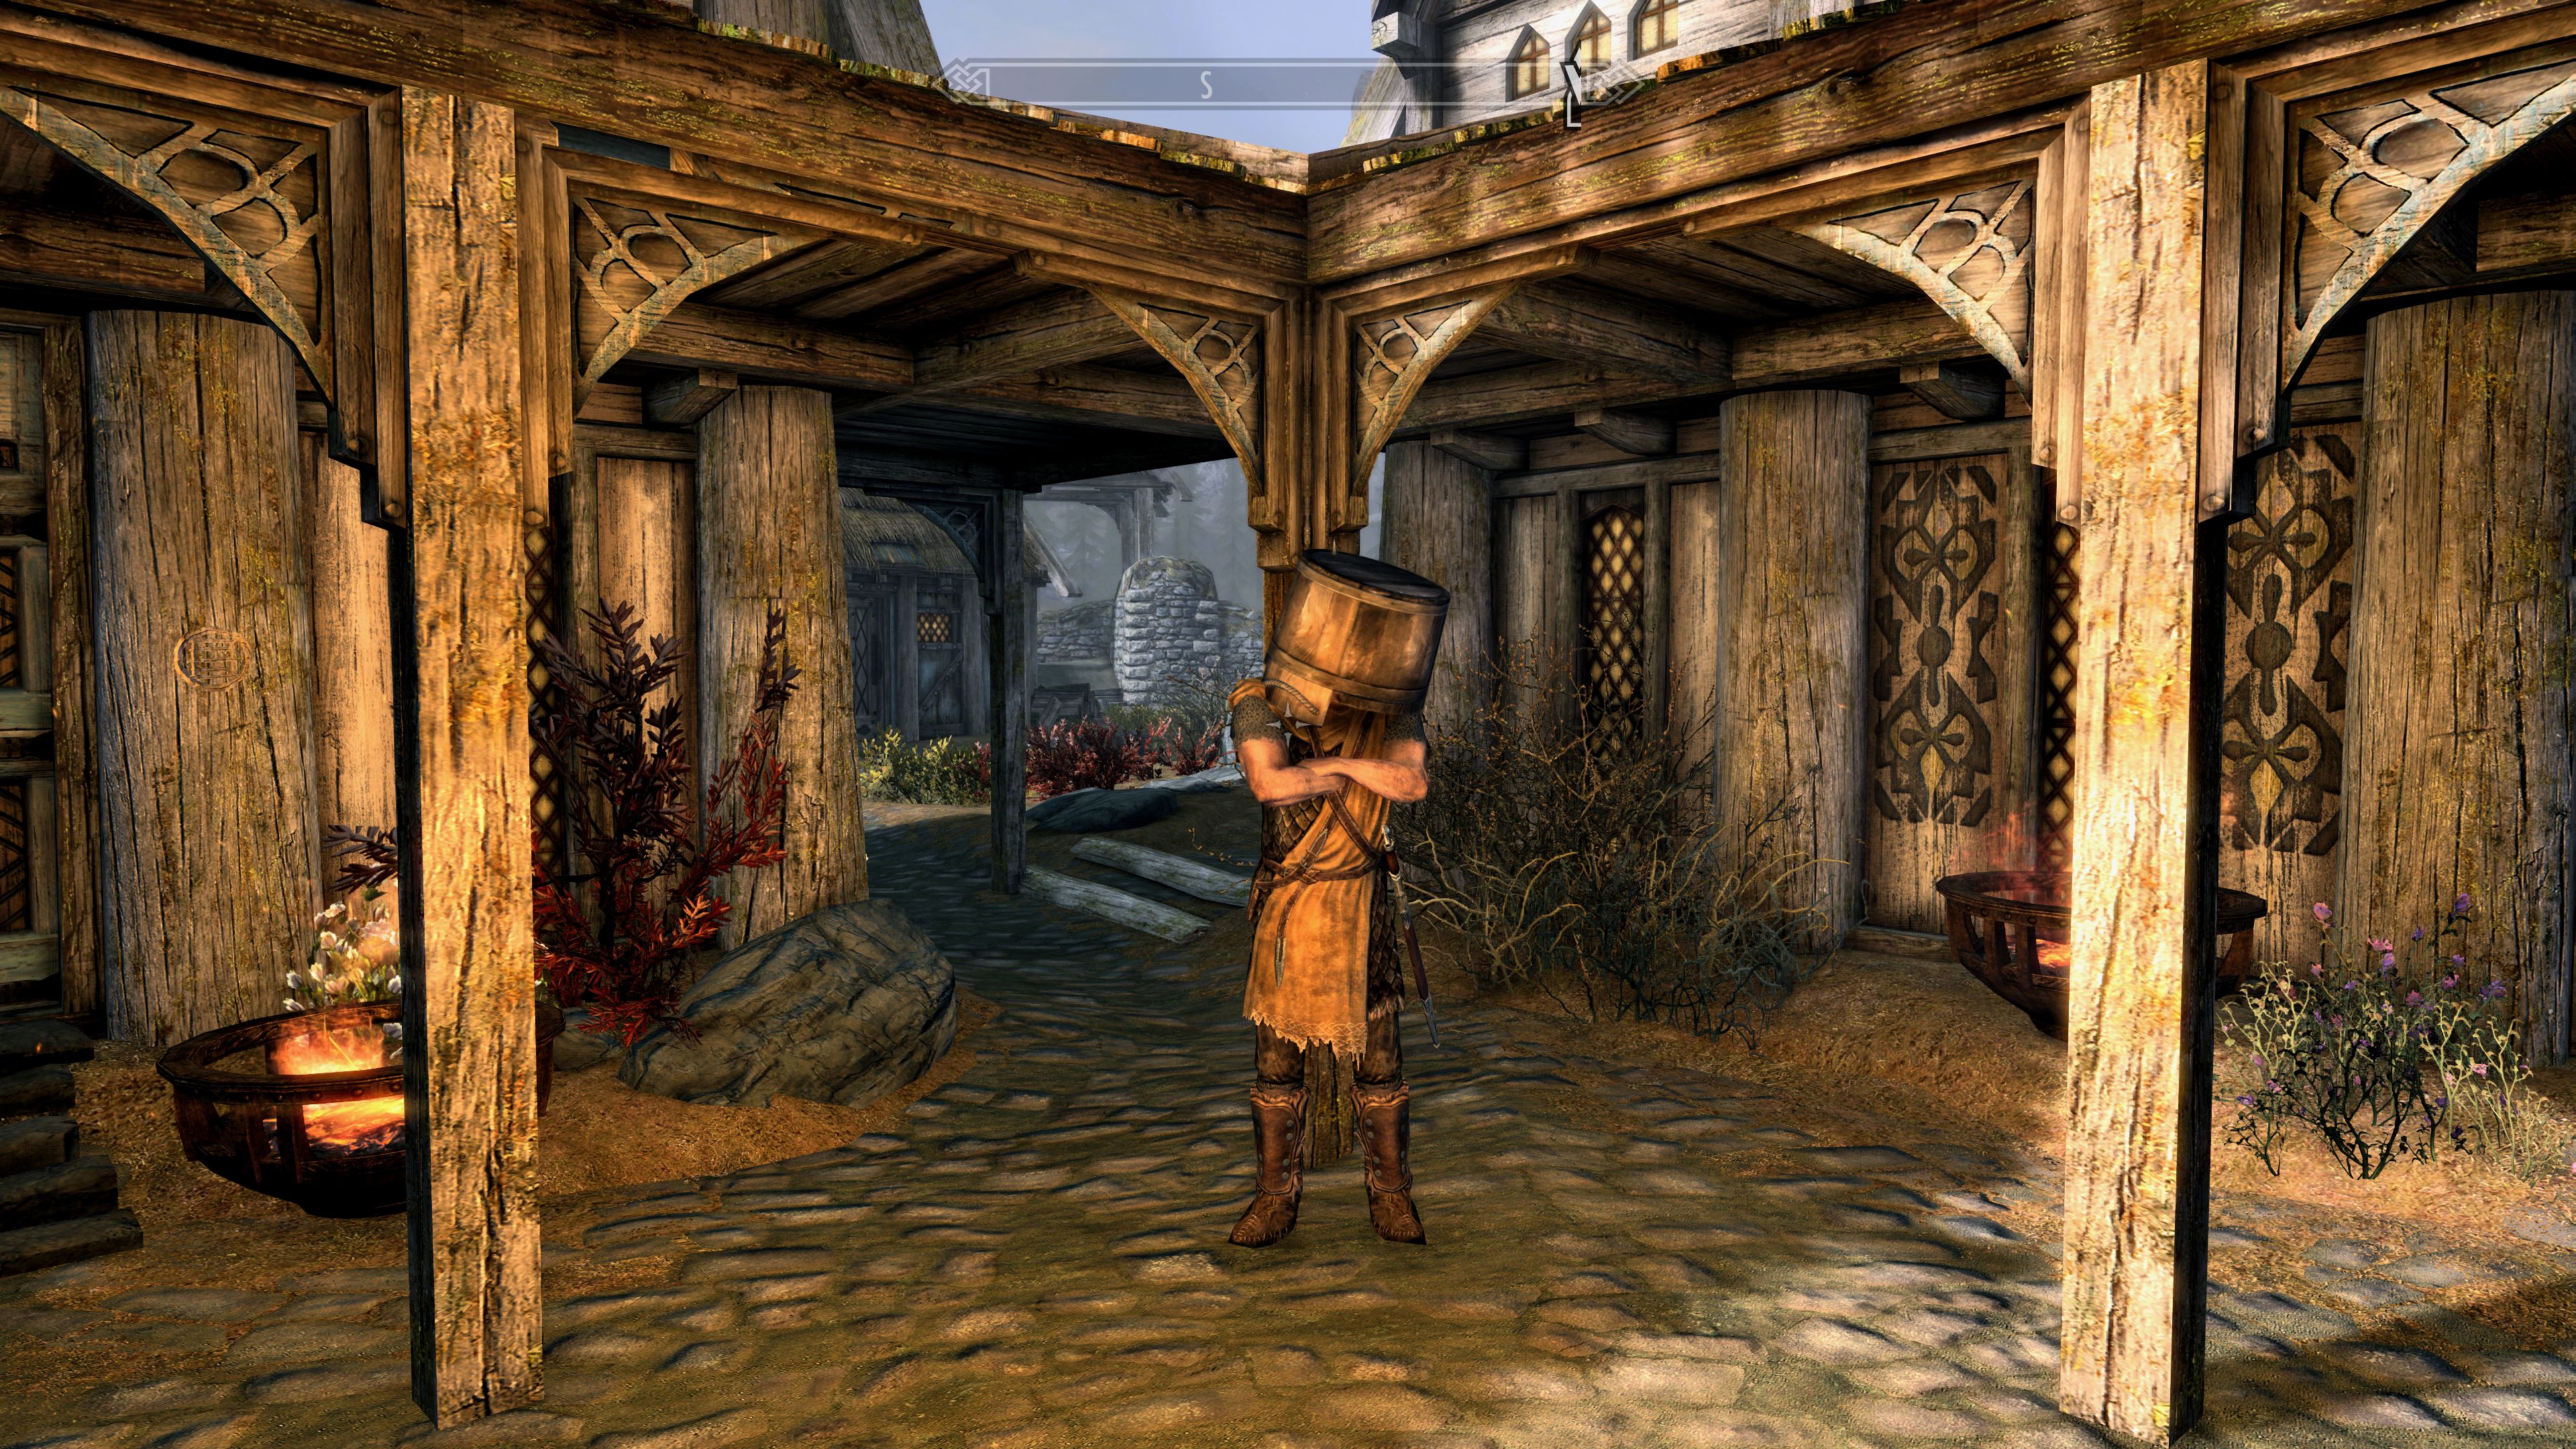 The Elder Scrolls V: Skyrim's whiterun guard with a bucket on his head.